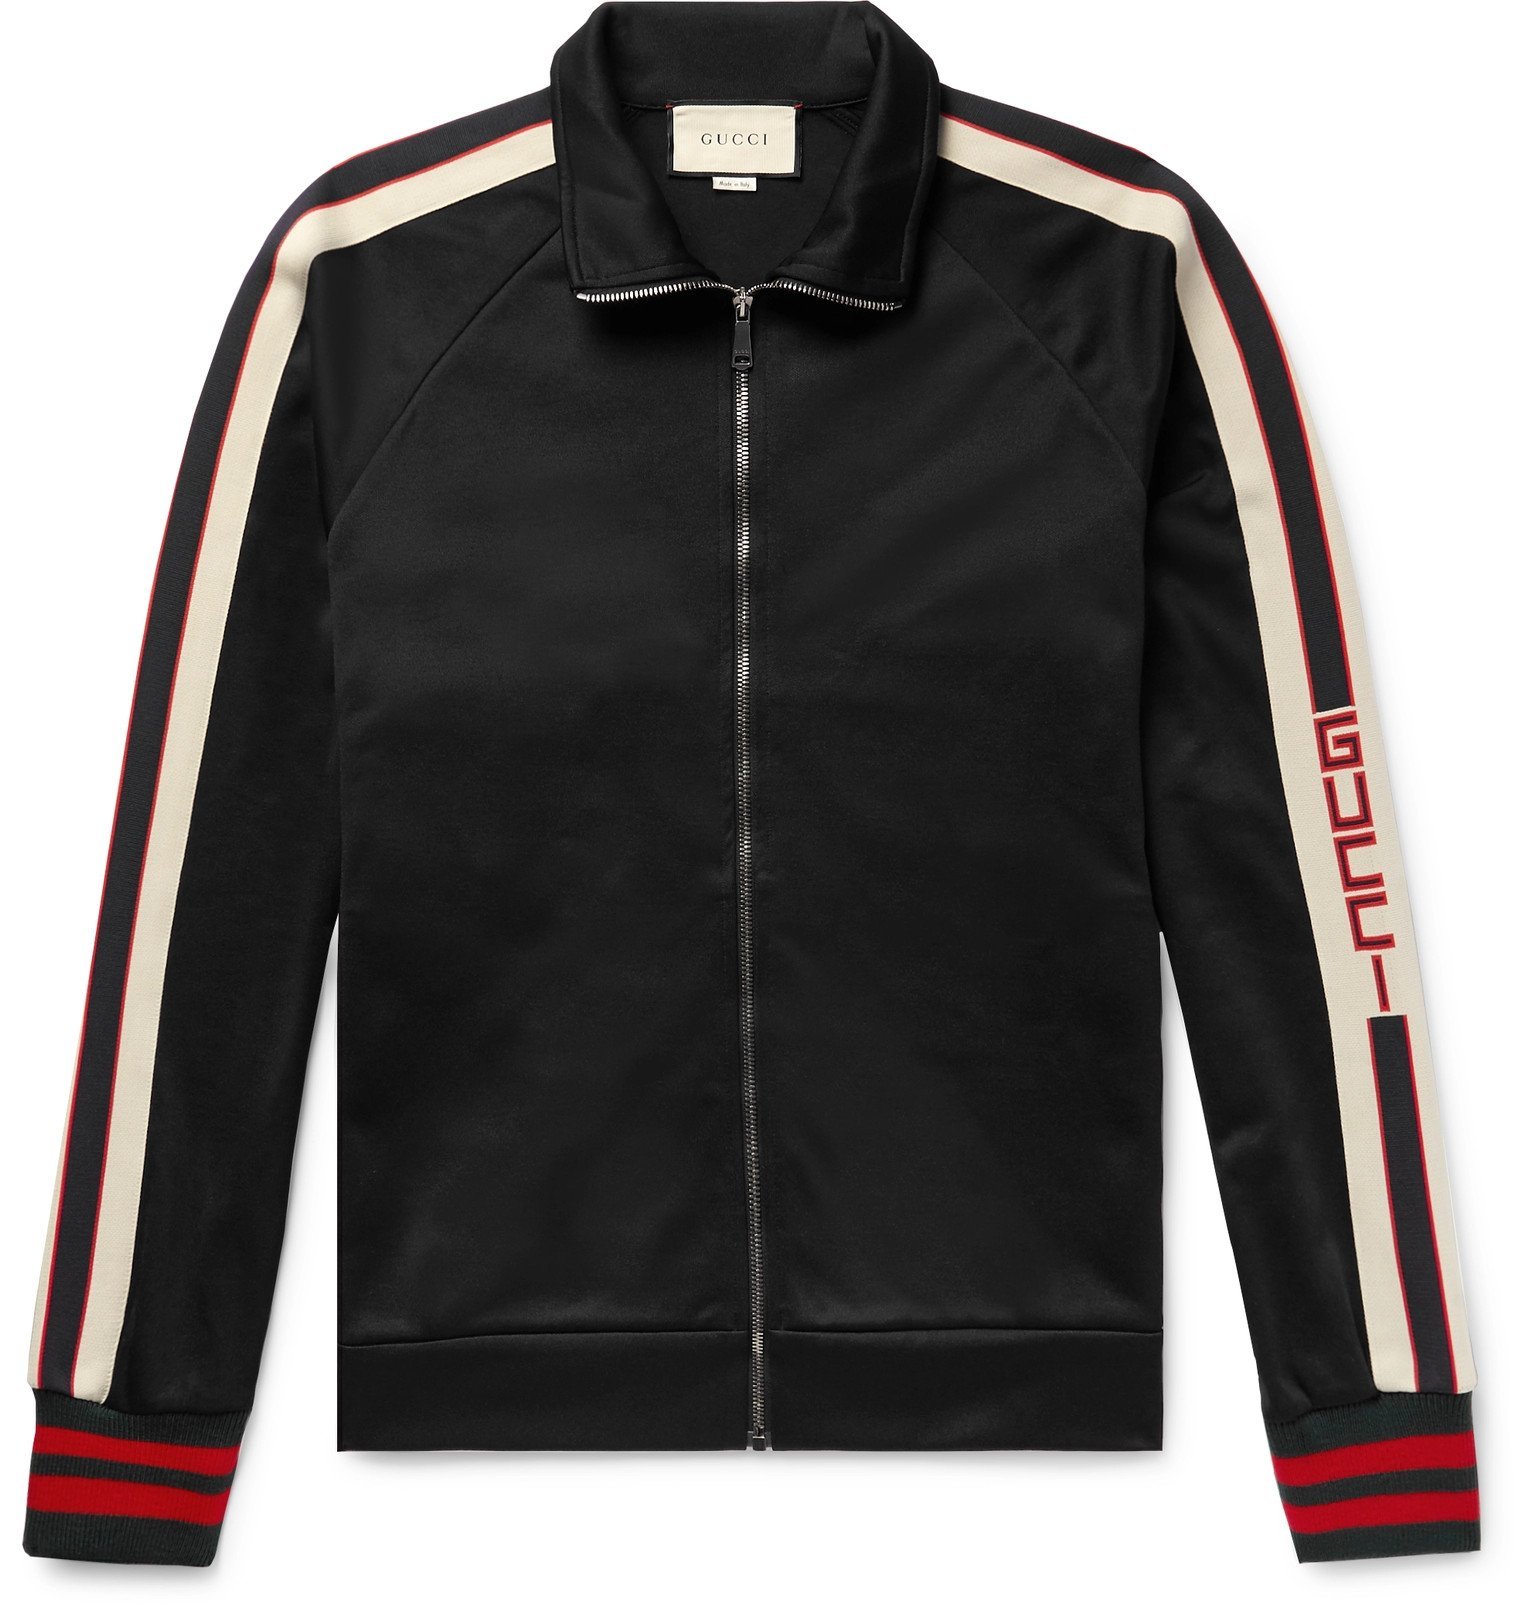 Gucci - Webbing-Trimmed Tech-Jersey Track Jacket - Black Gucci